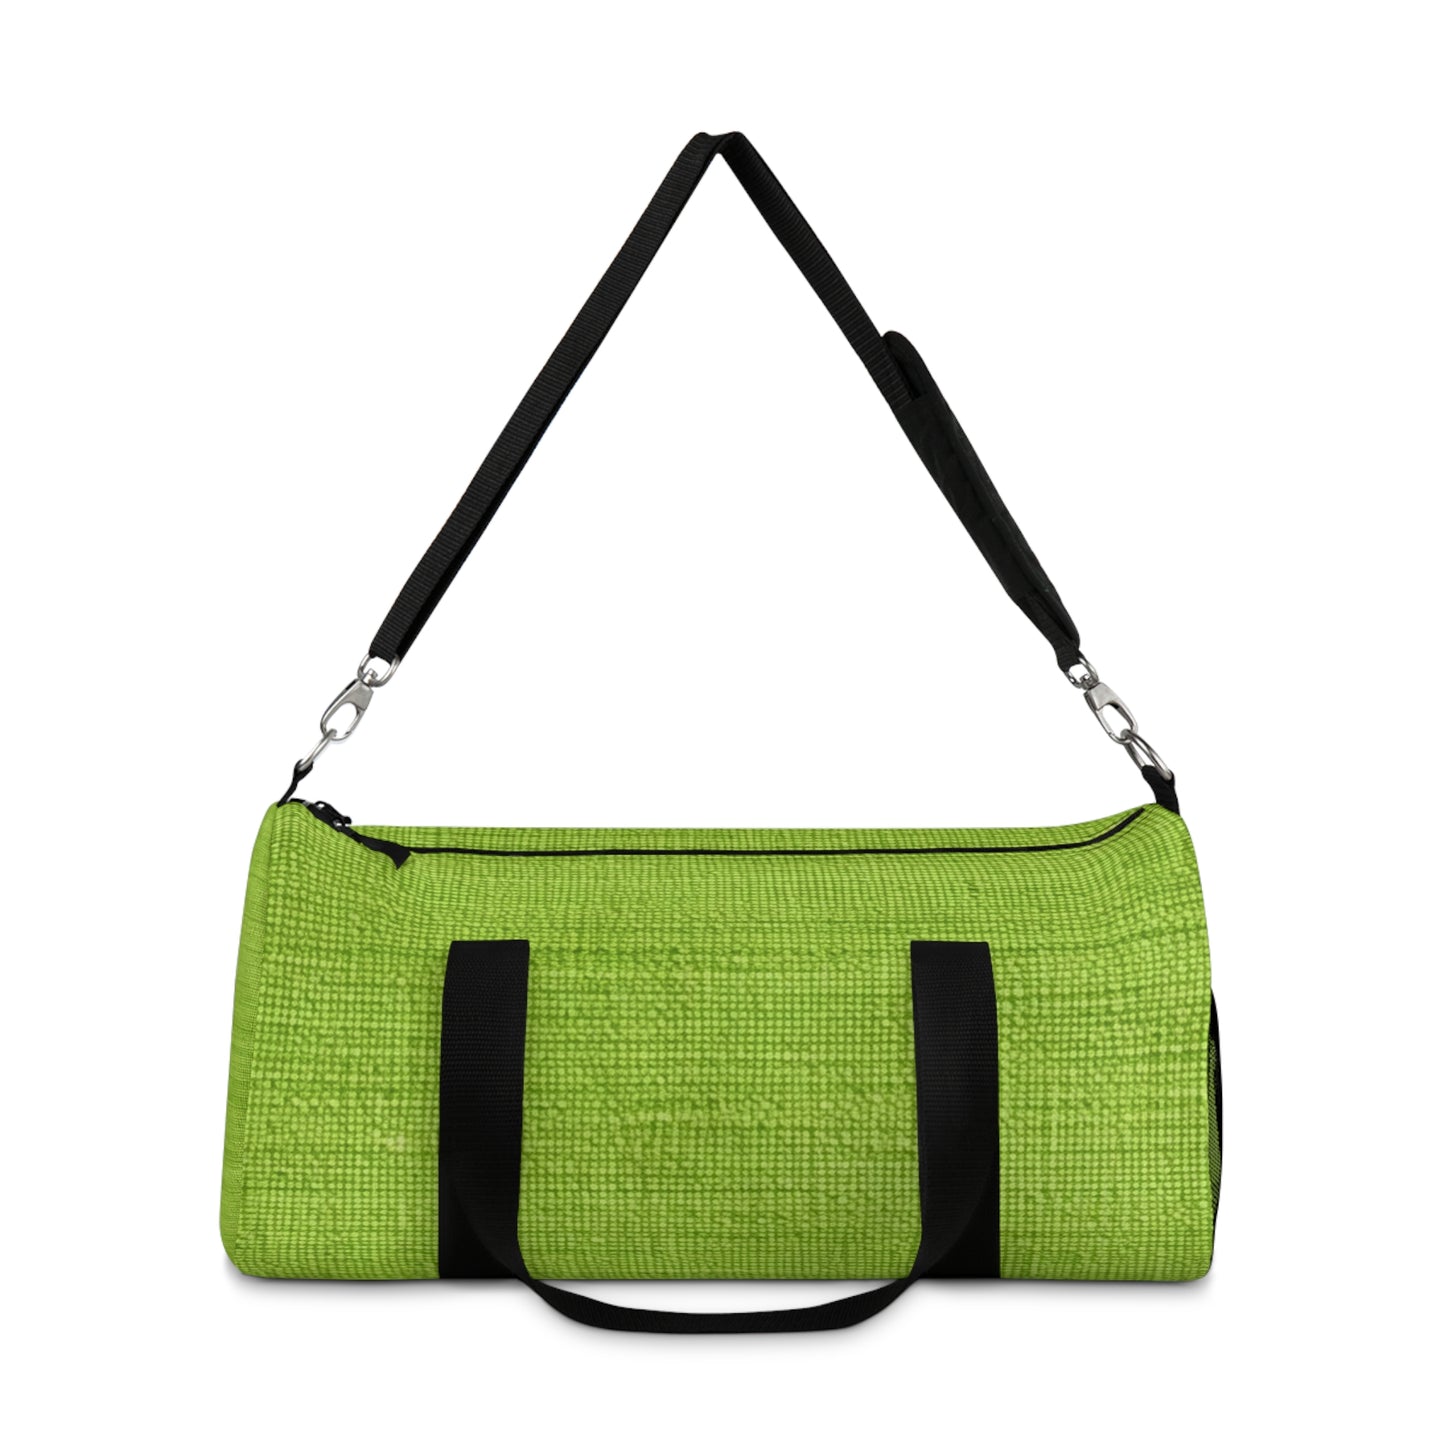 Lush Grass Neon Green: Denim-Inspired, Springtime Fabric Style - Duffel Bag